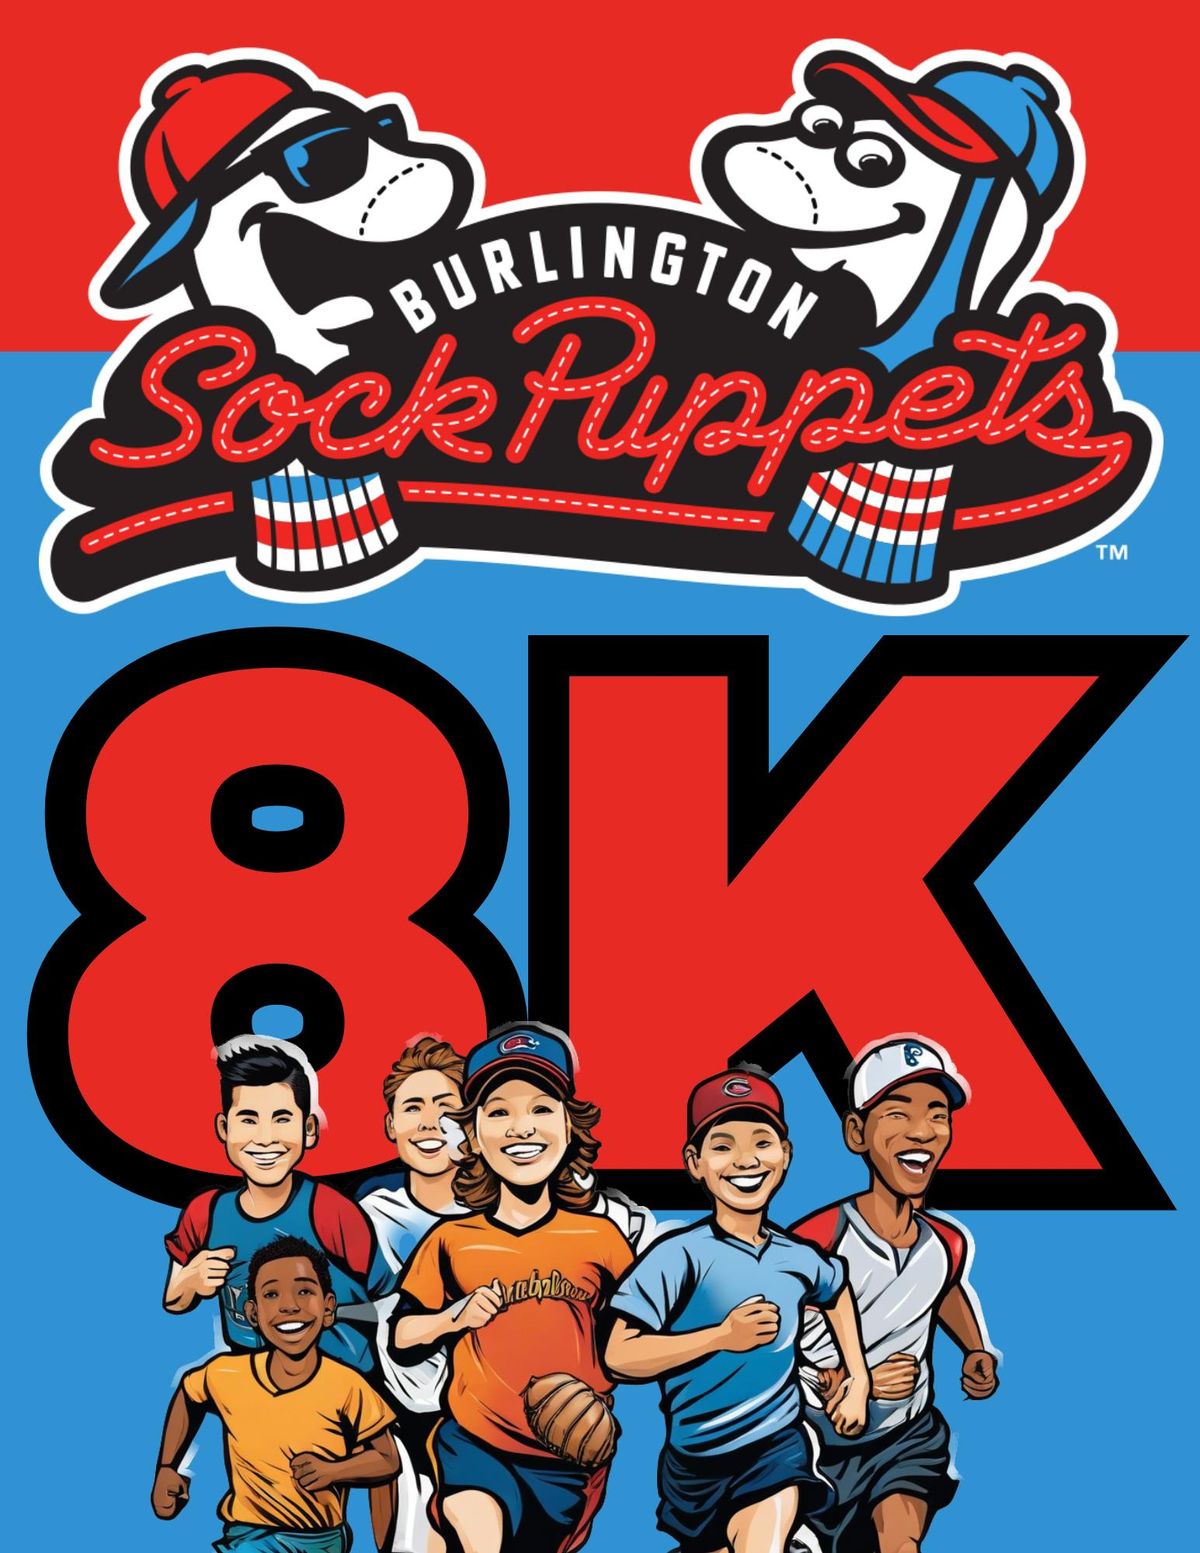 Burlington Sock Puppets 8k on July 13th